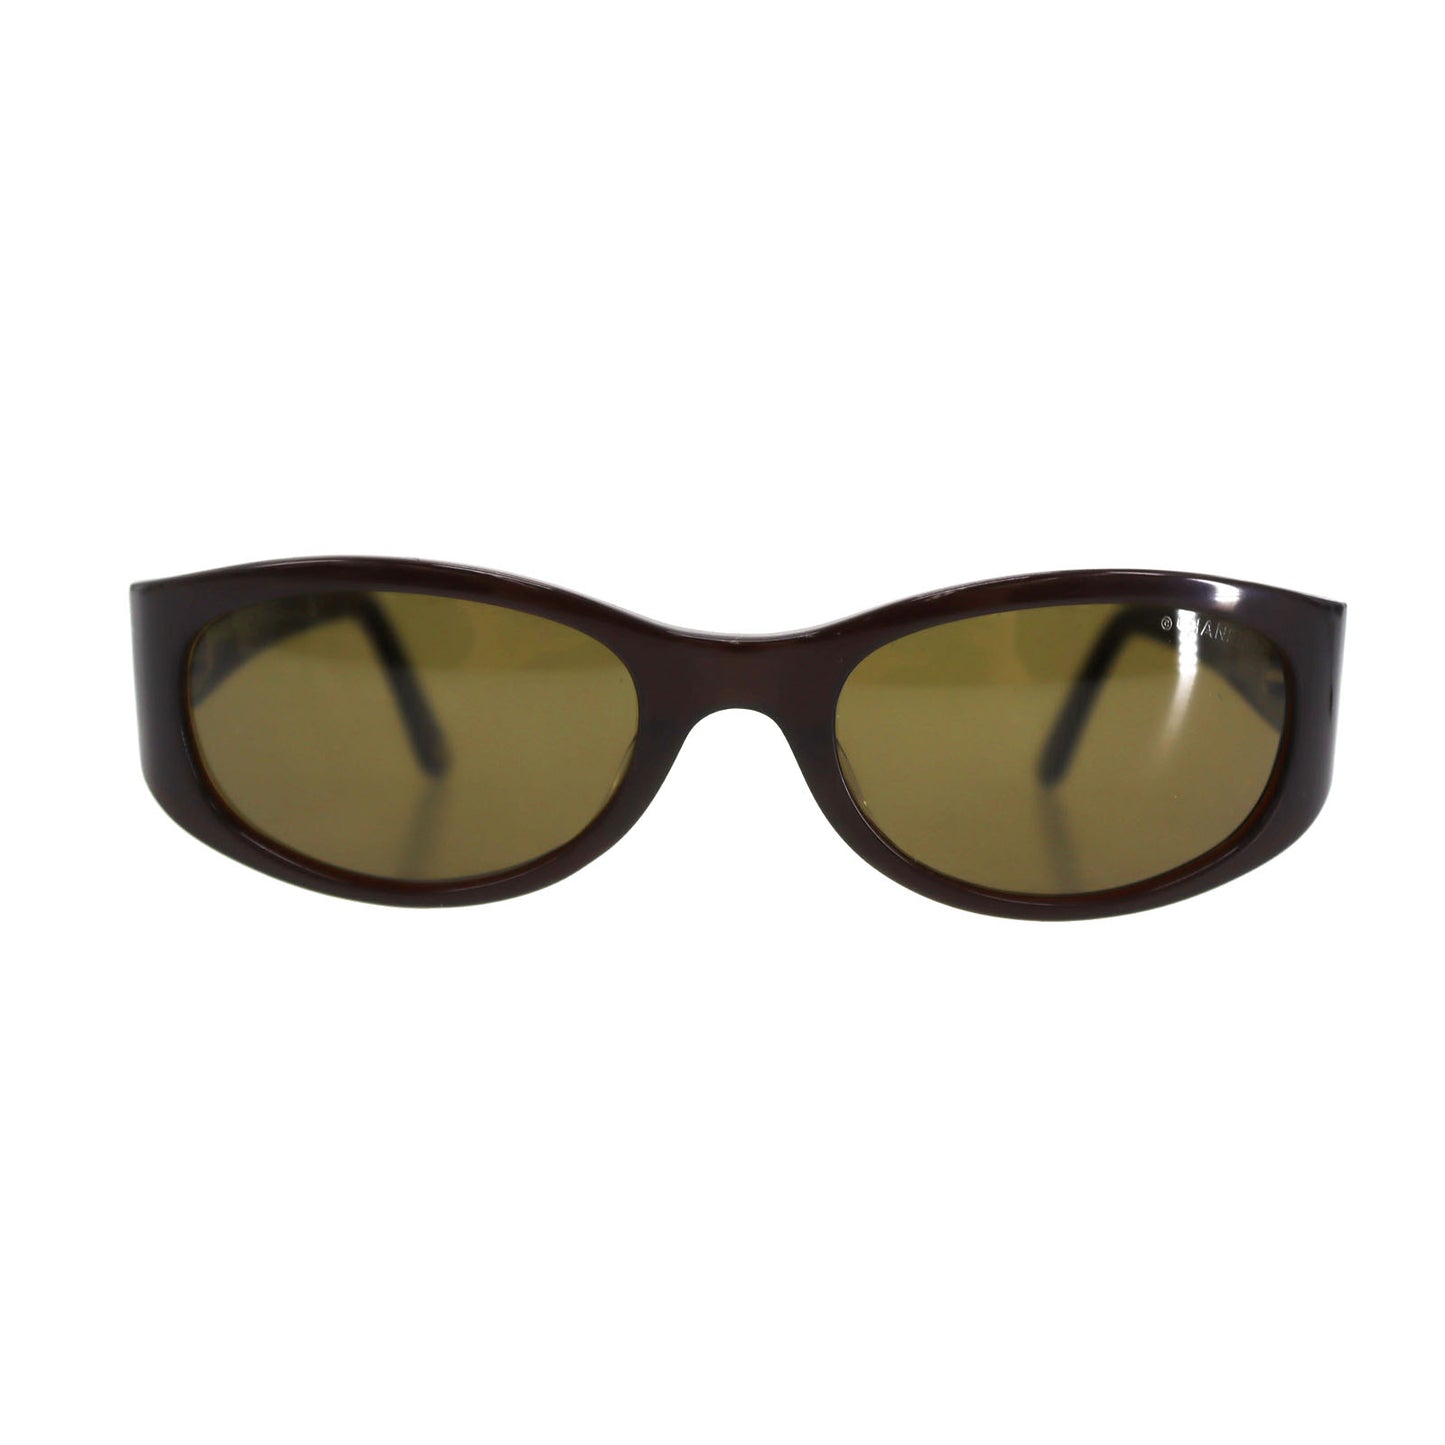 CHANEL Logos Sunglasses Brown Eye Wear #CO945